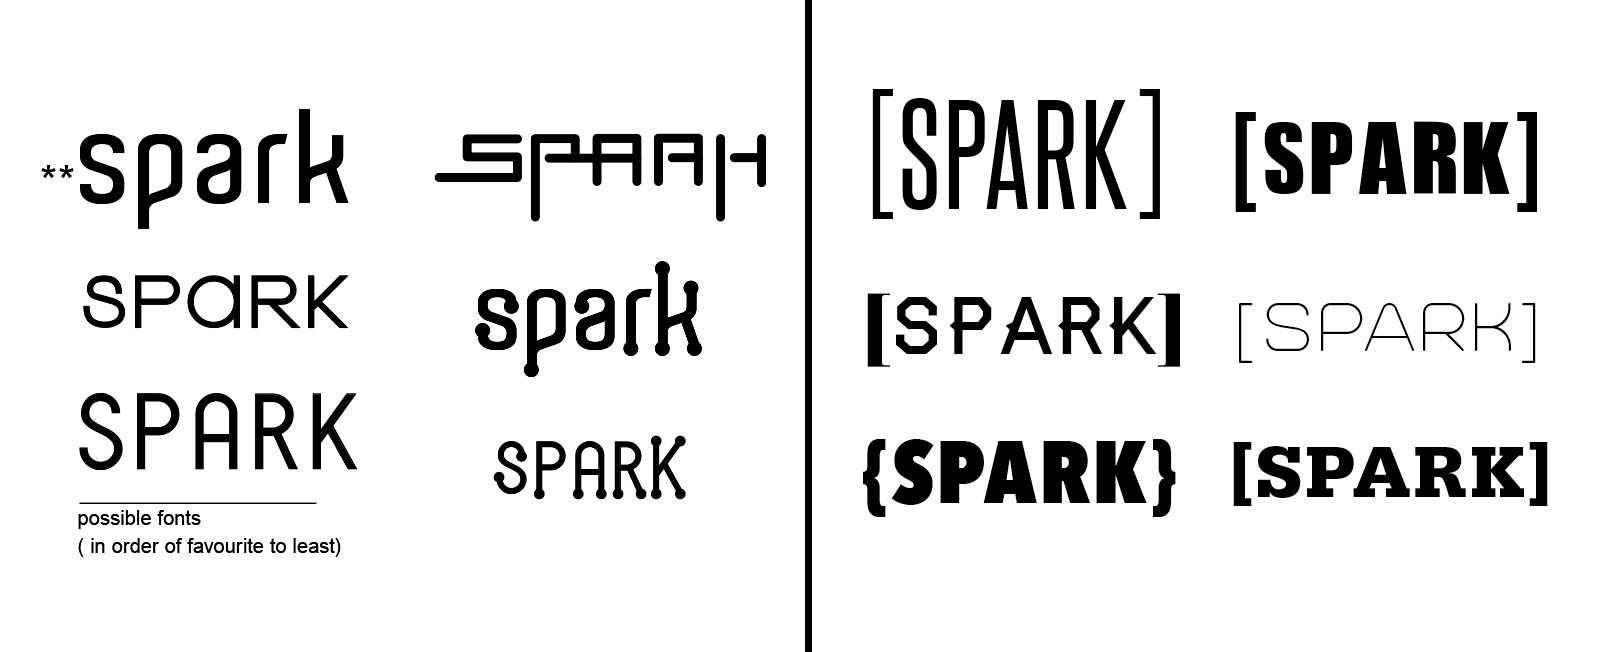 Spark logo roughs